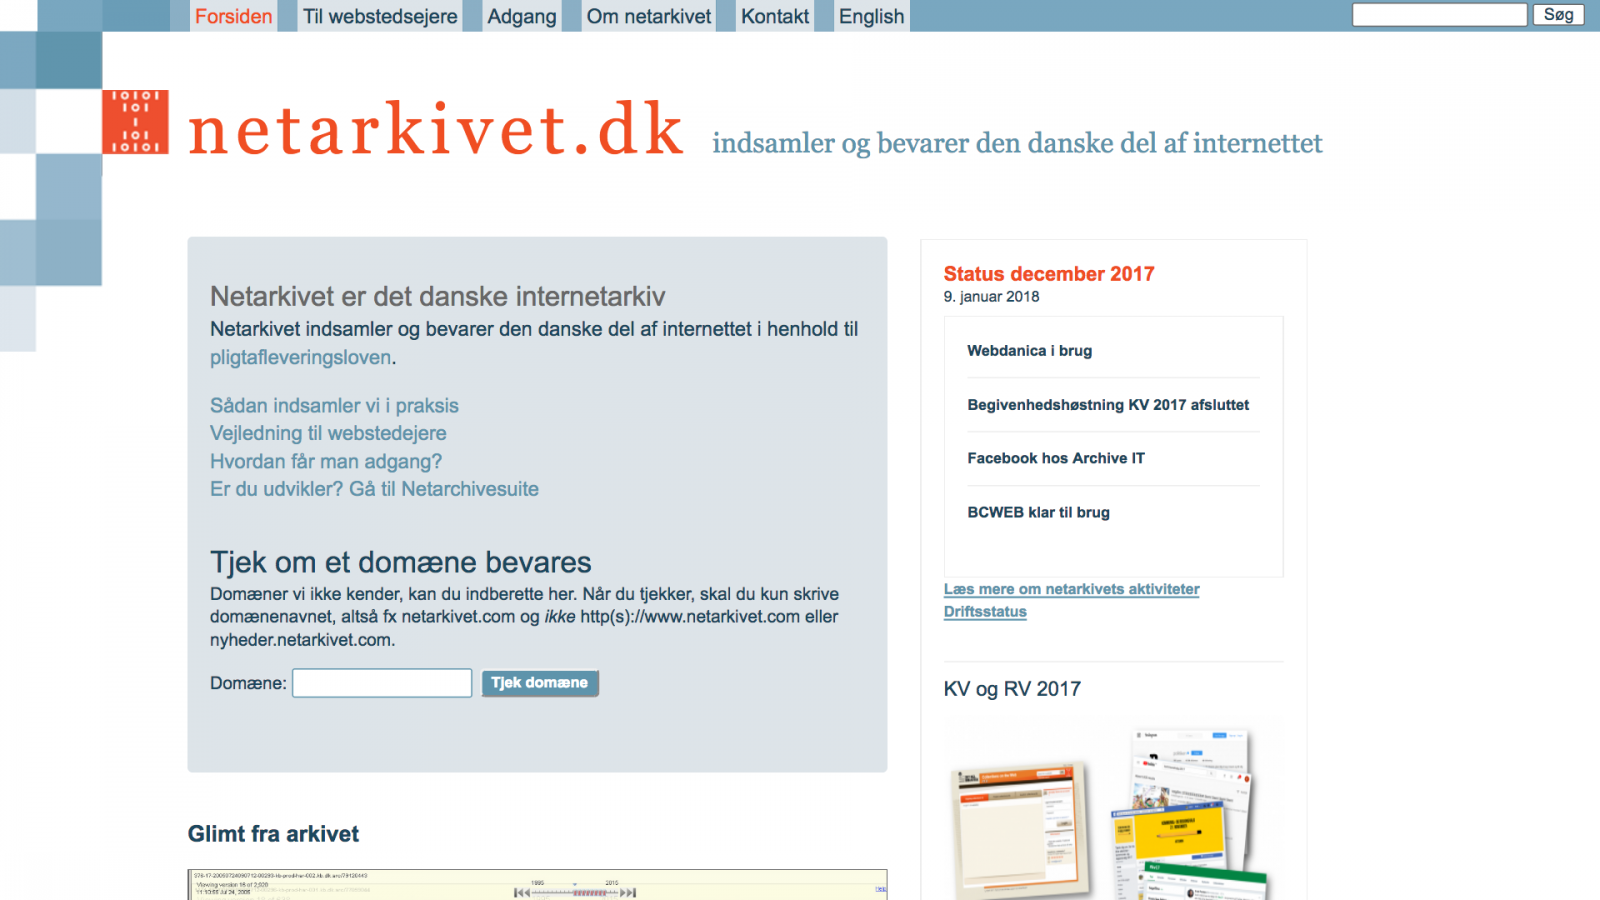 netarkivet.dk - desktop version.